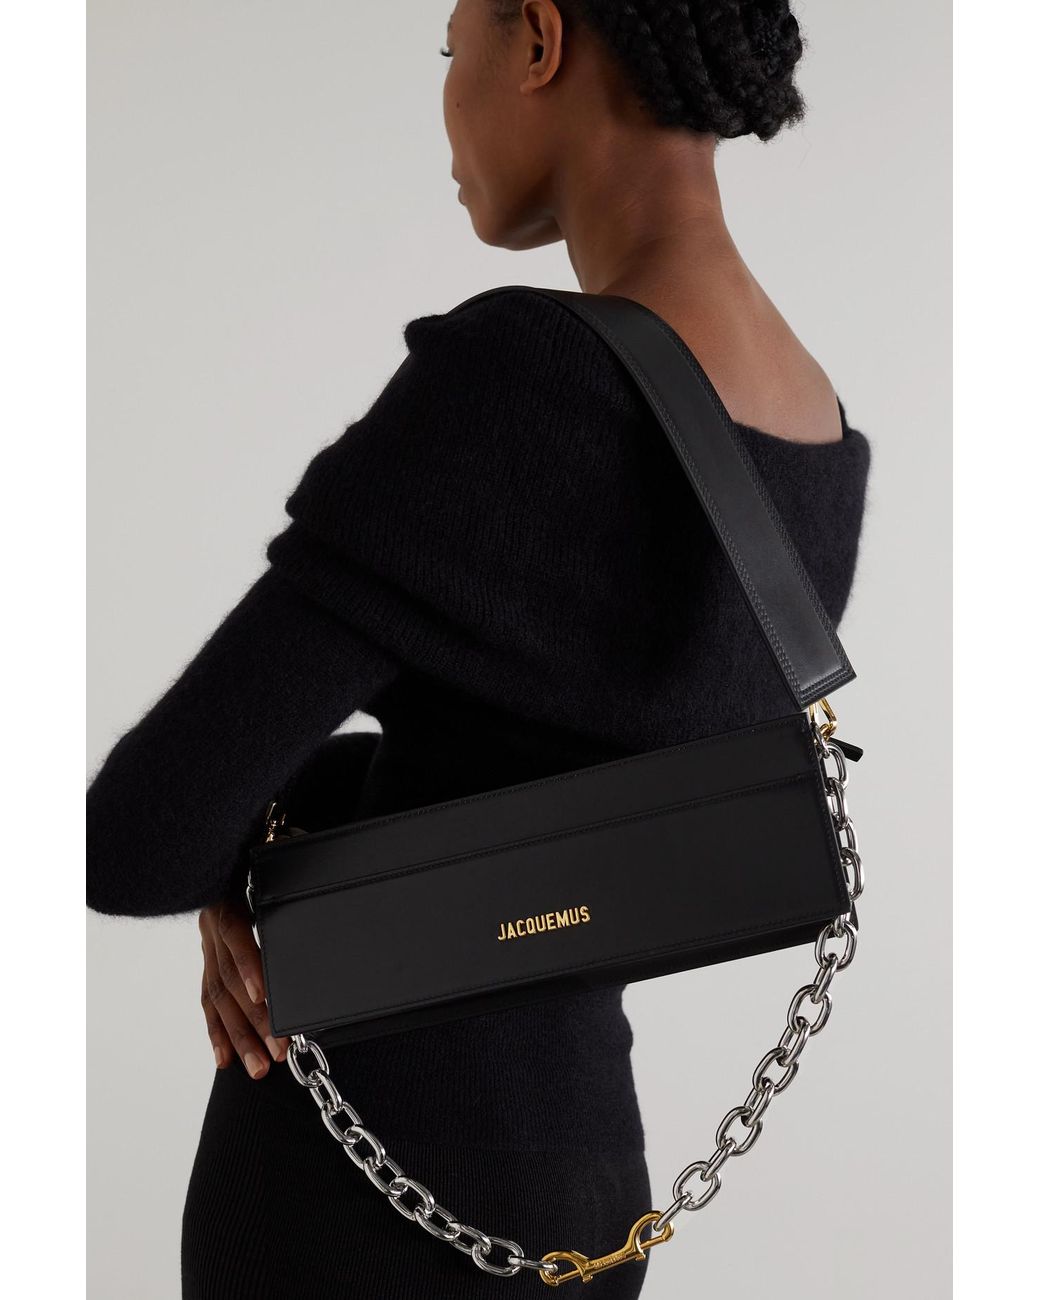 Jacquemus Le Ciuciu Leather Shoulder Bag in Black | Lyst